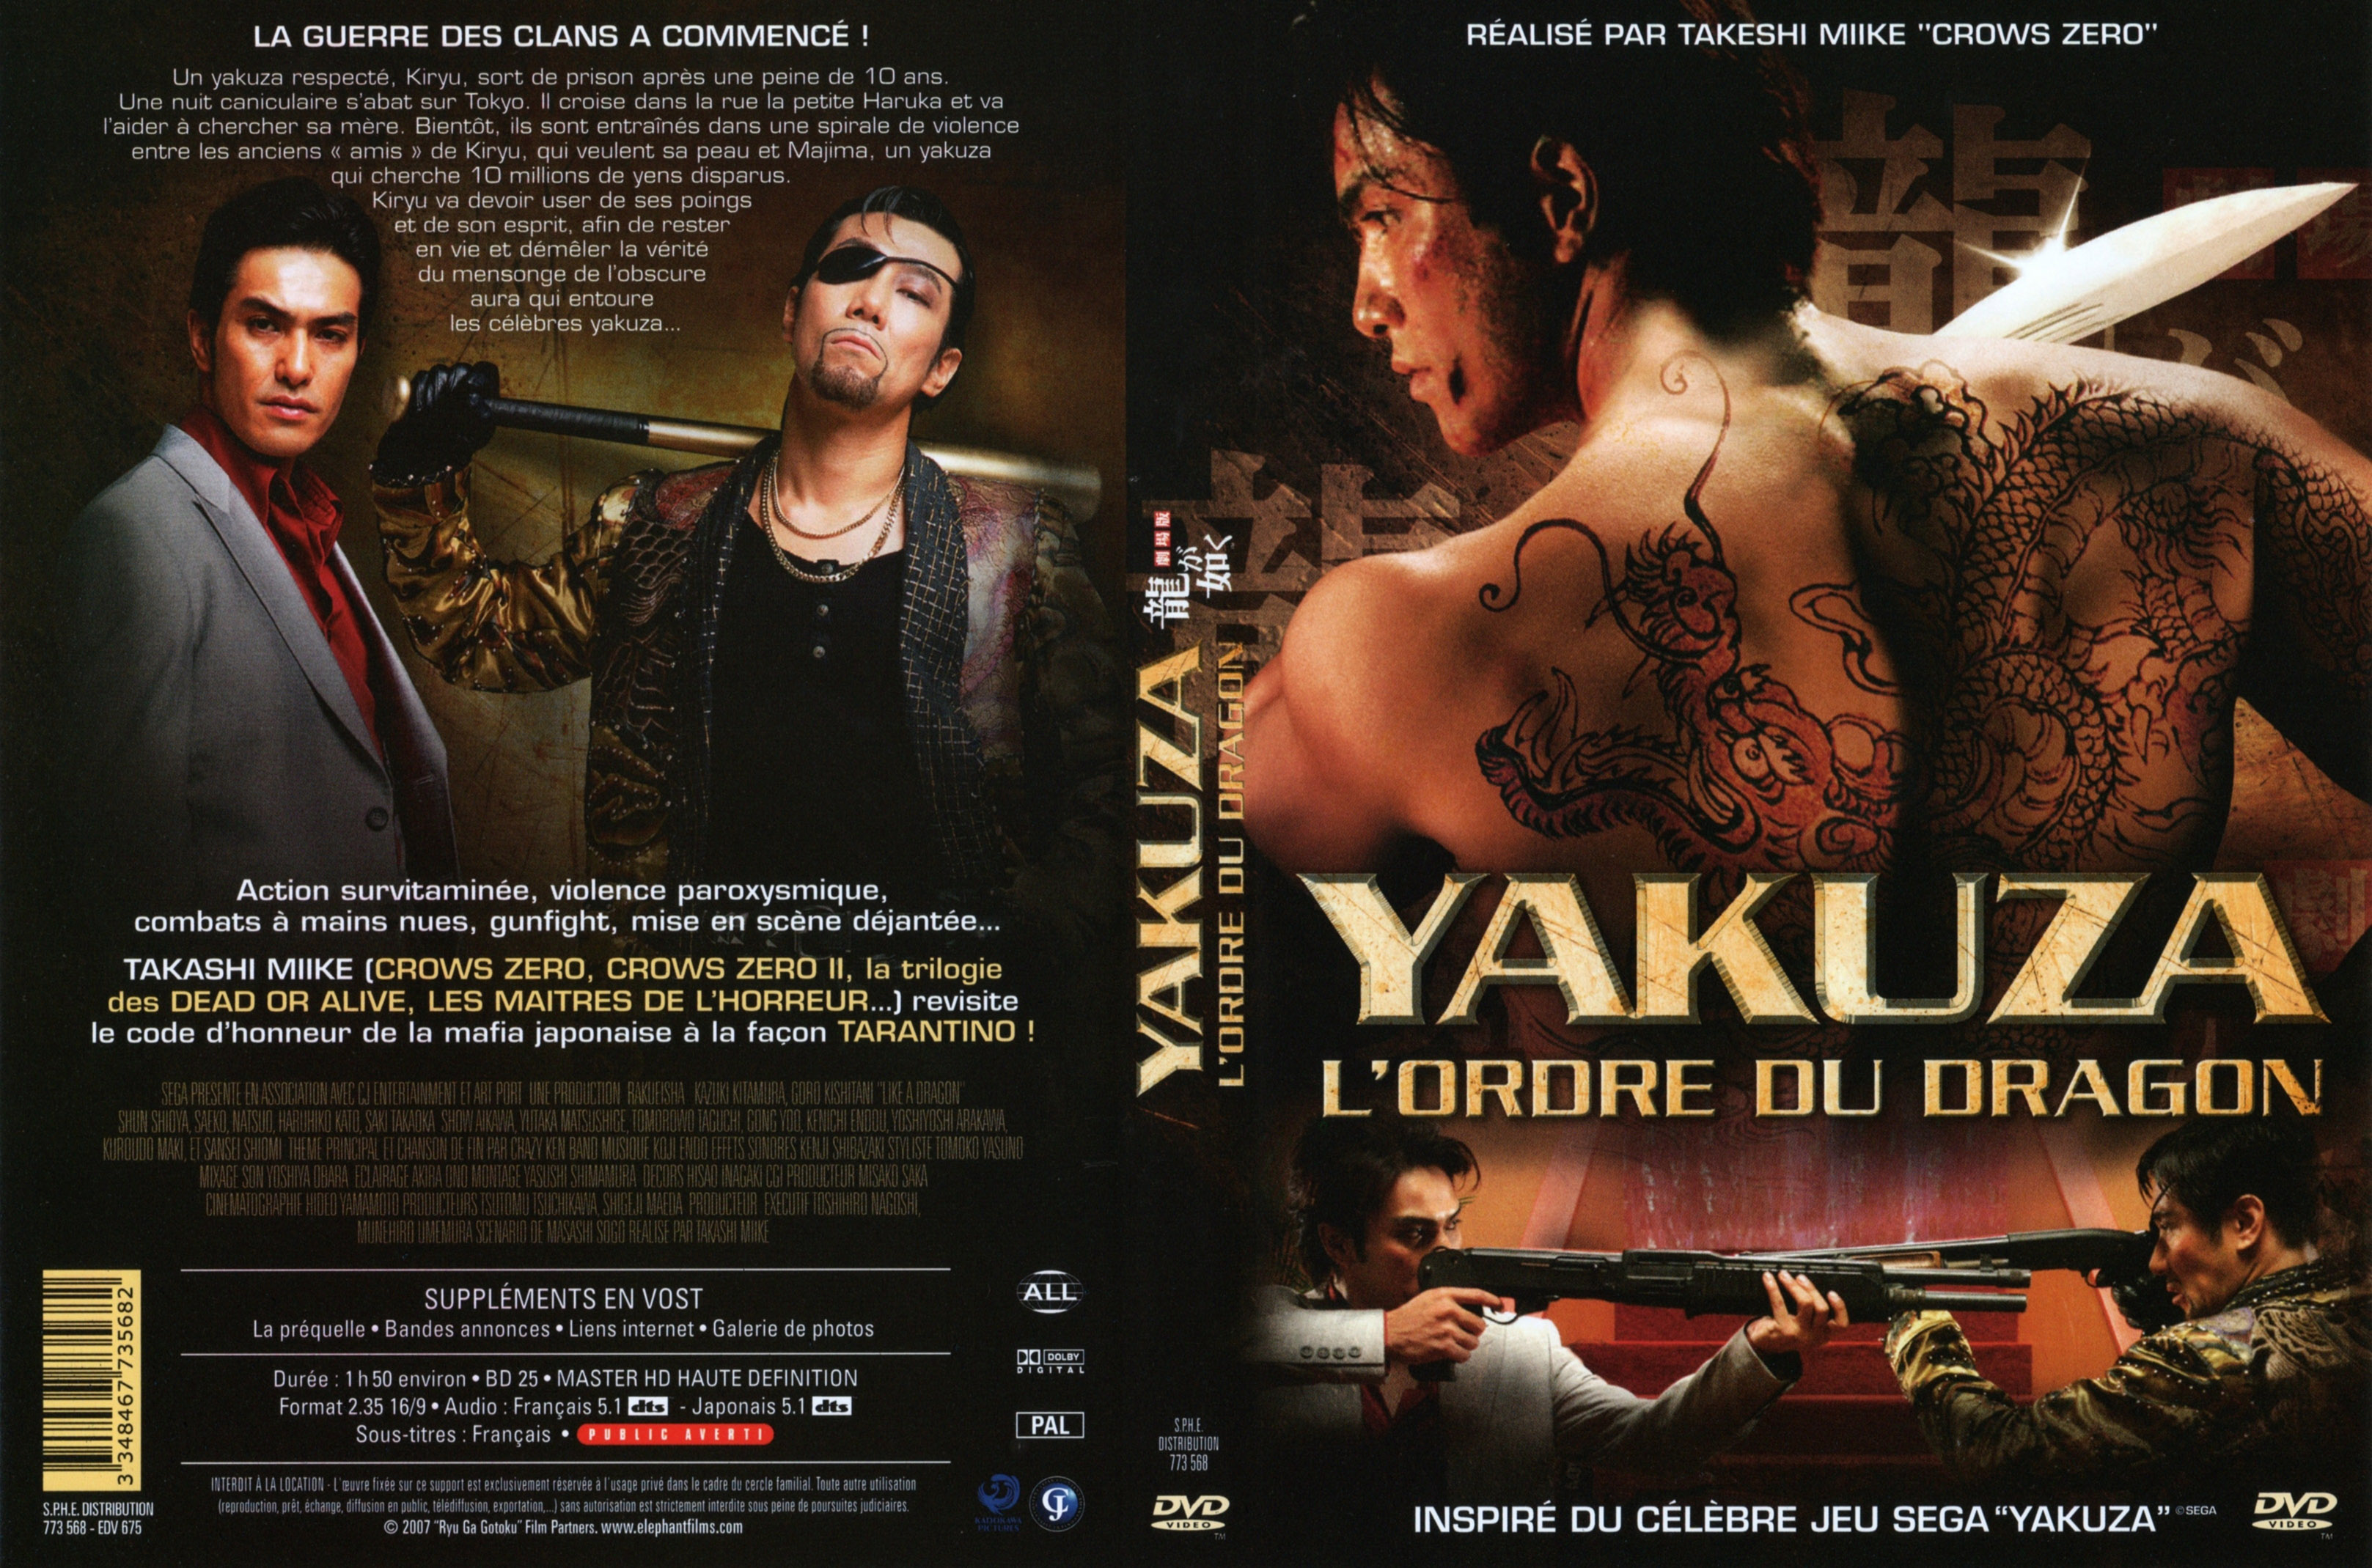 Jaquette DVD Yakuza L